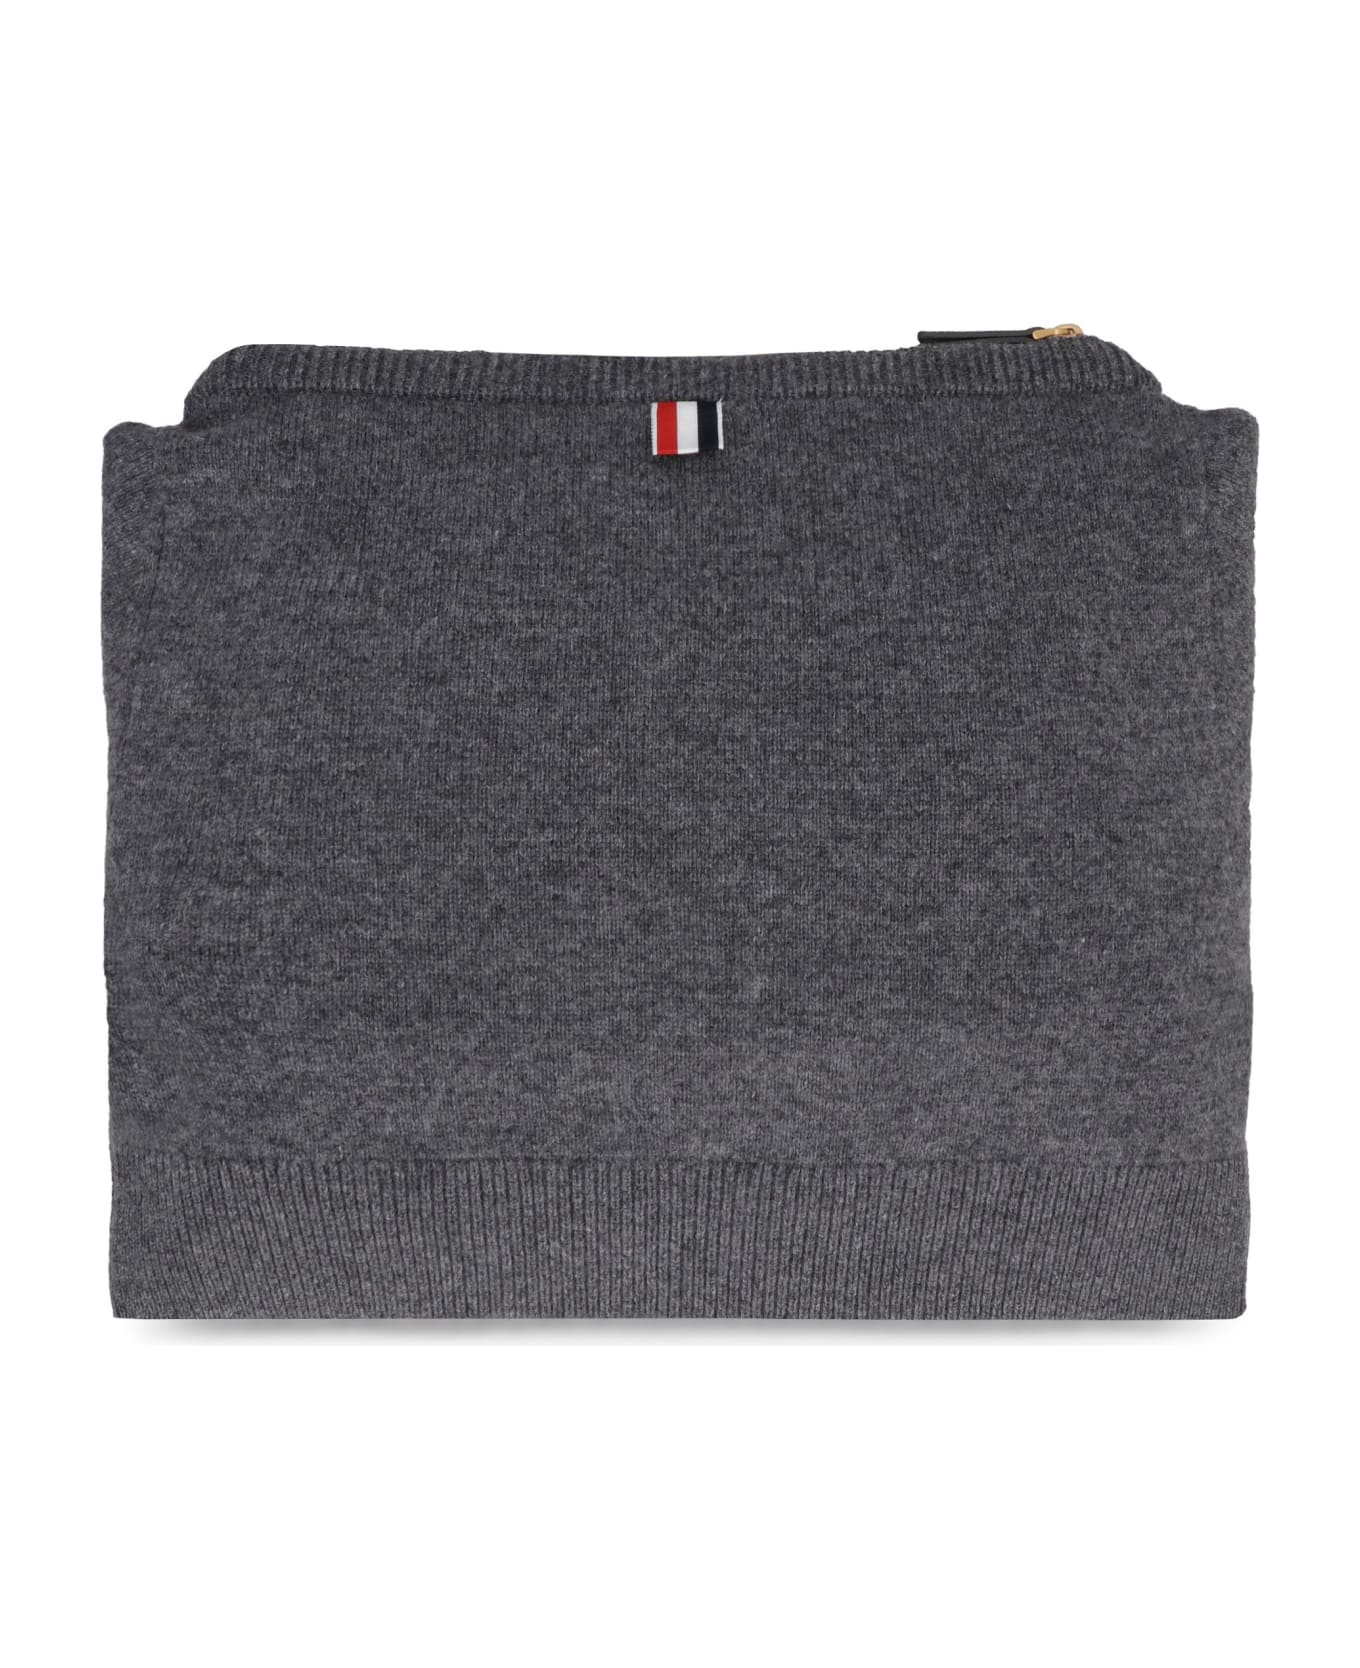 Thom Browne Knit Bag - grey